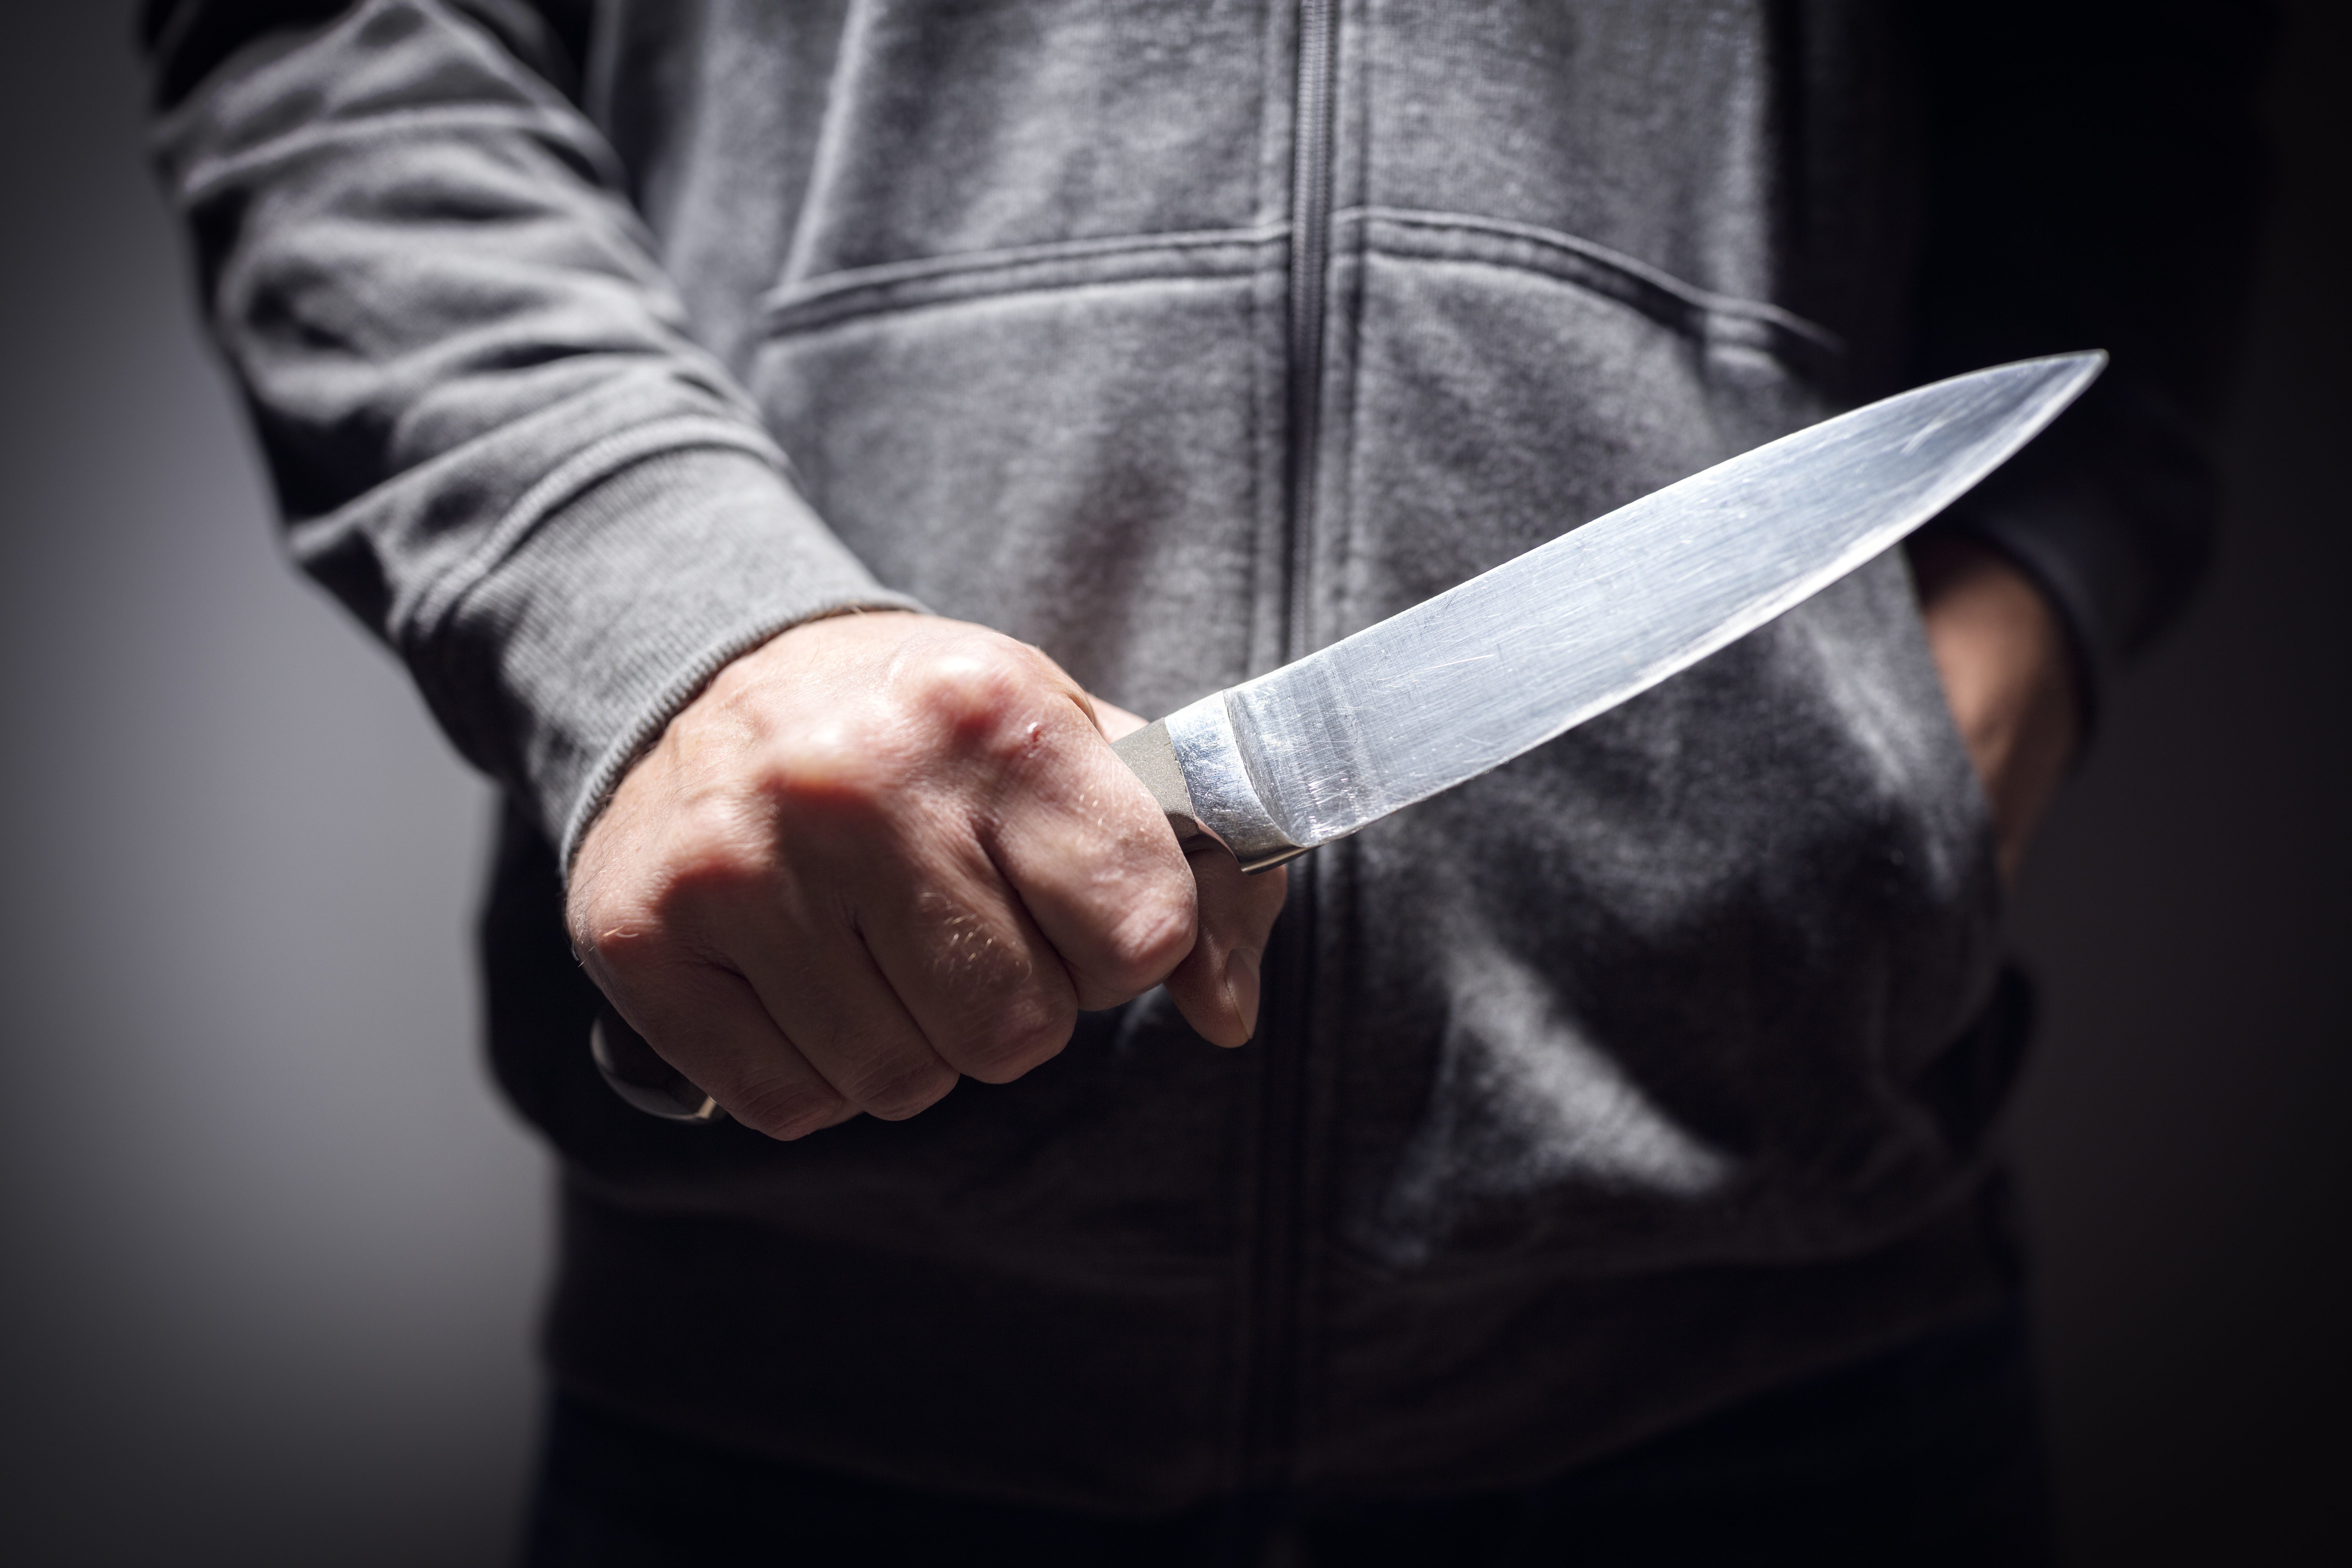 Man holding a knife